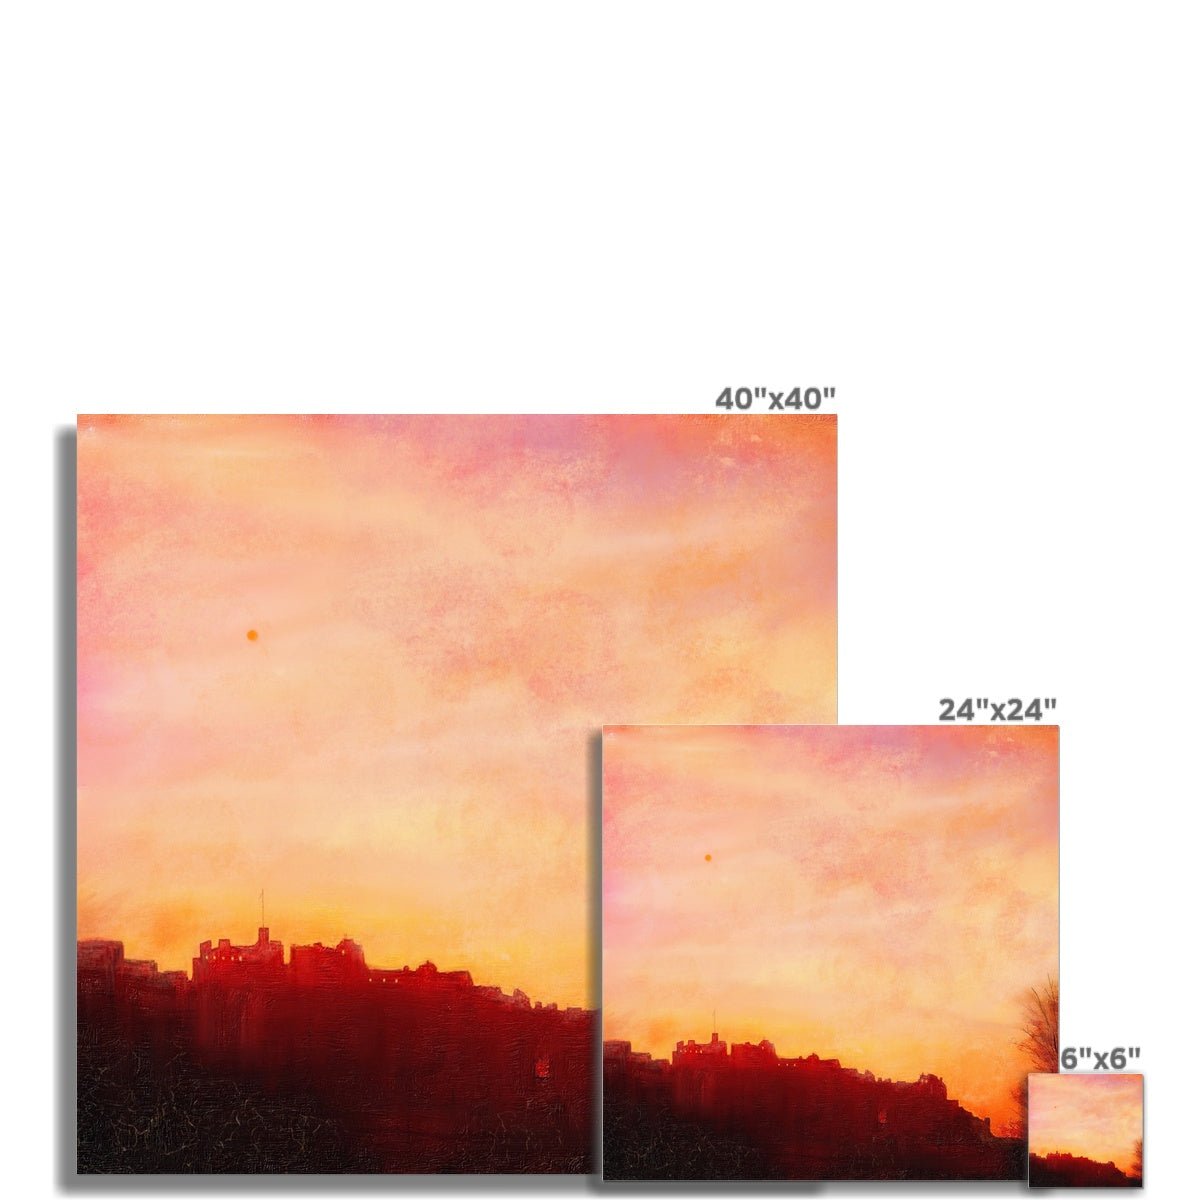 Edinburgh Castle Sunset Painting | Fine Art Prints From Scotland-Unframed Prints-Historic & Iconic Scotland Art Gallery-Paintings, Prints, Homeware, Art Gifts From Scotland By Scottish Artist Kevin Hunter